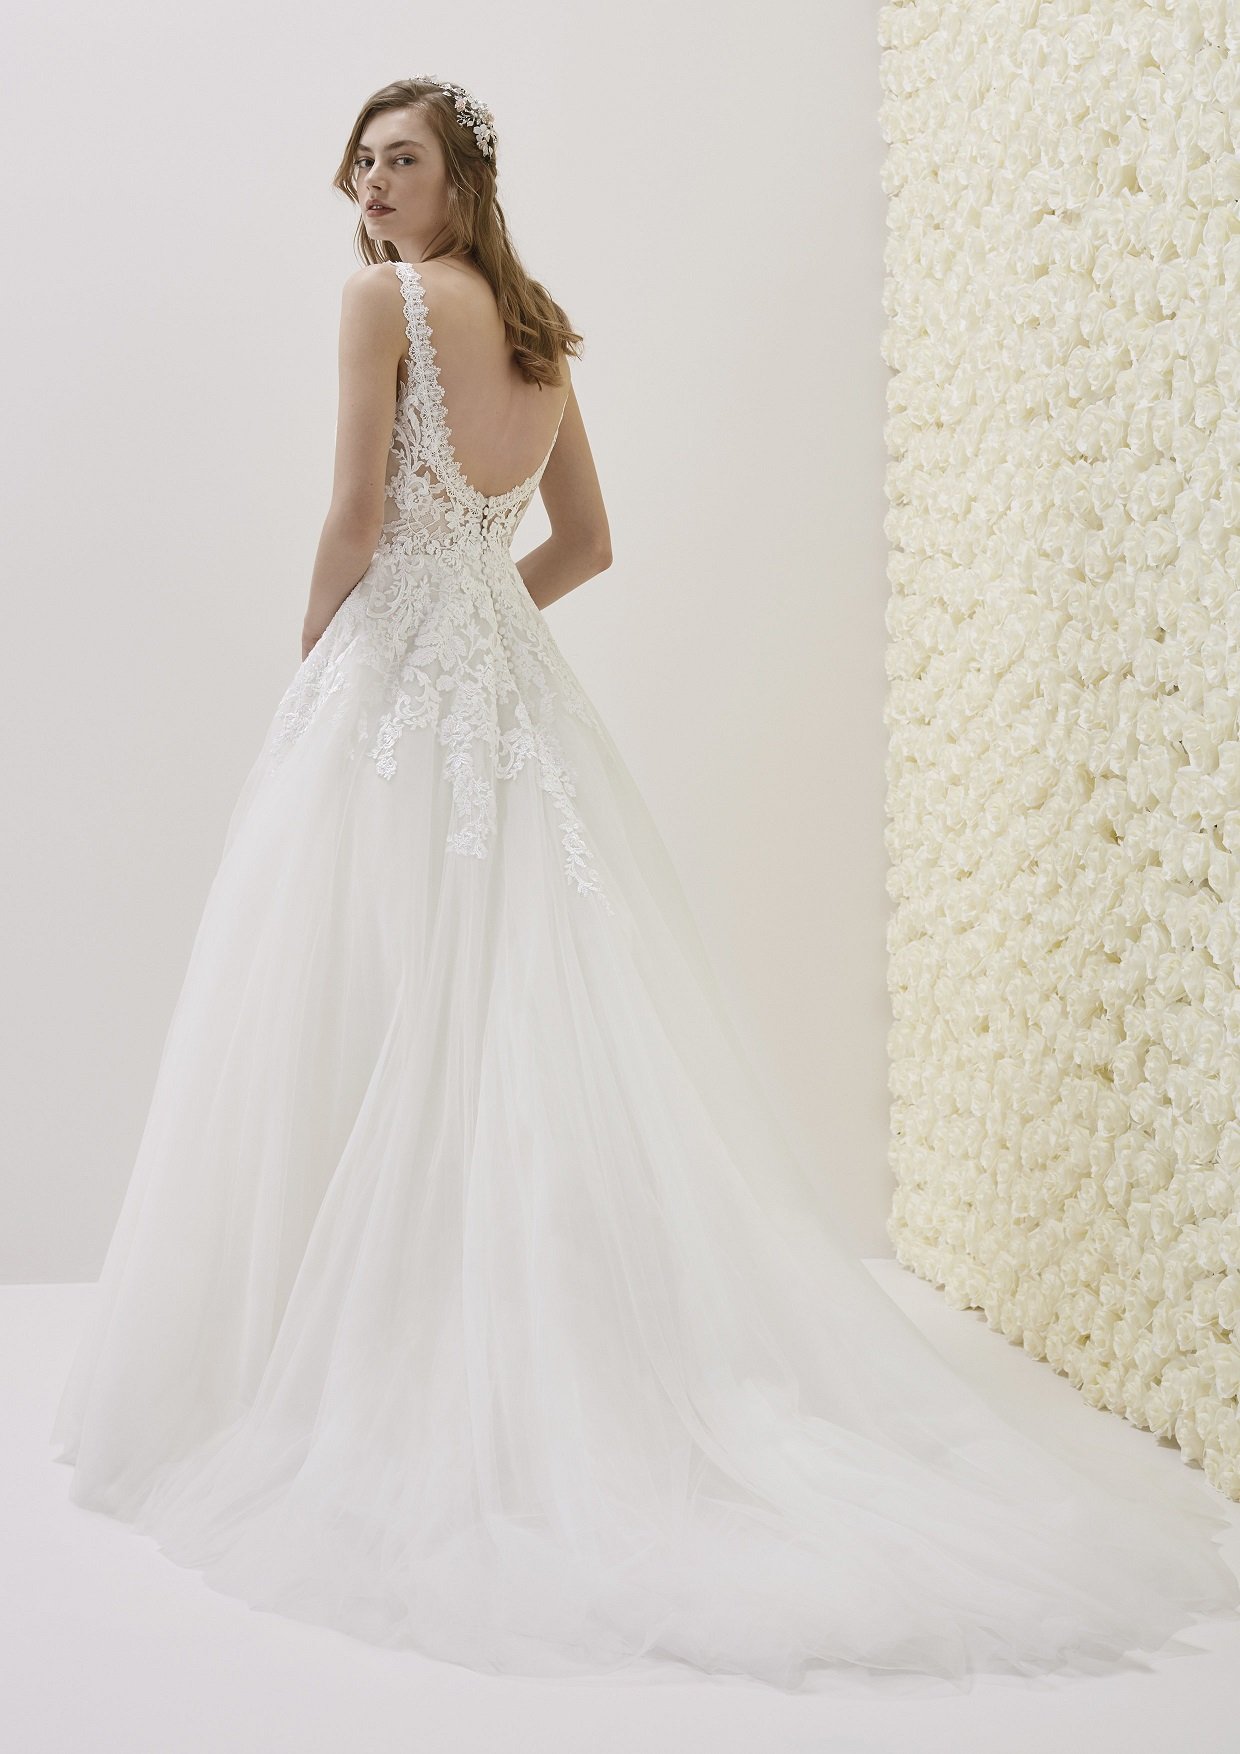 Spectacular full skirt Wedding gown Modes Bridal NZ